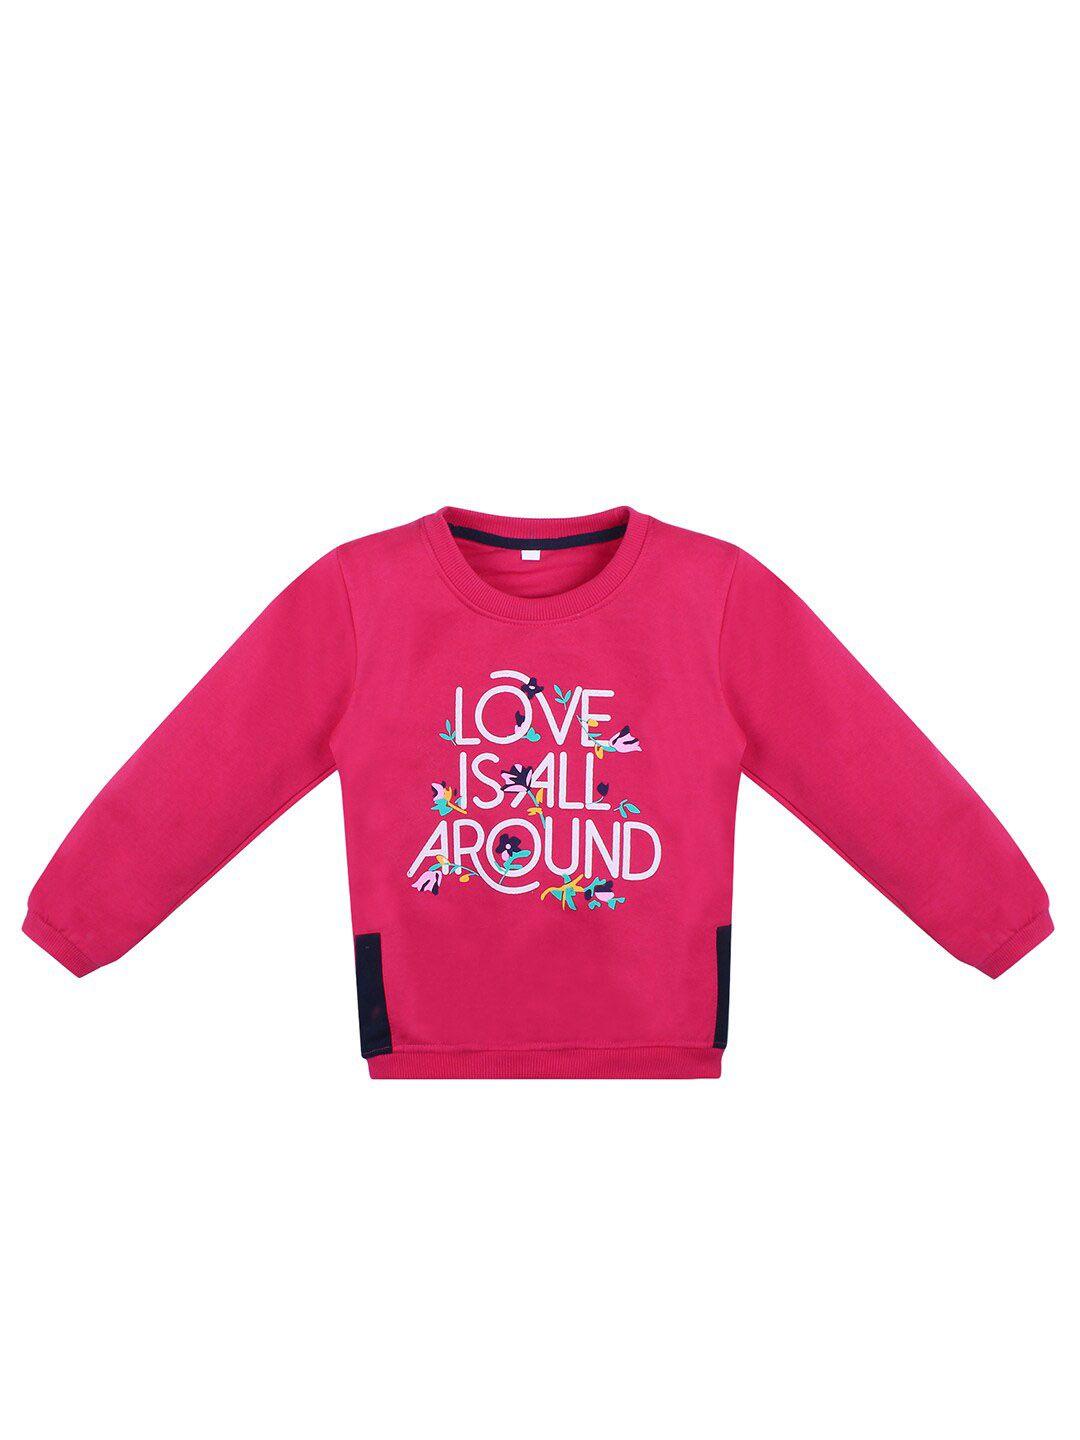 superminis unisex kids pink printed sweatshirt